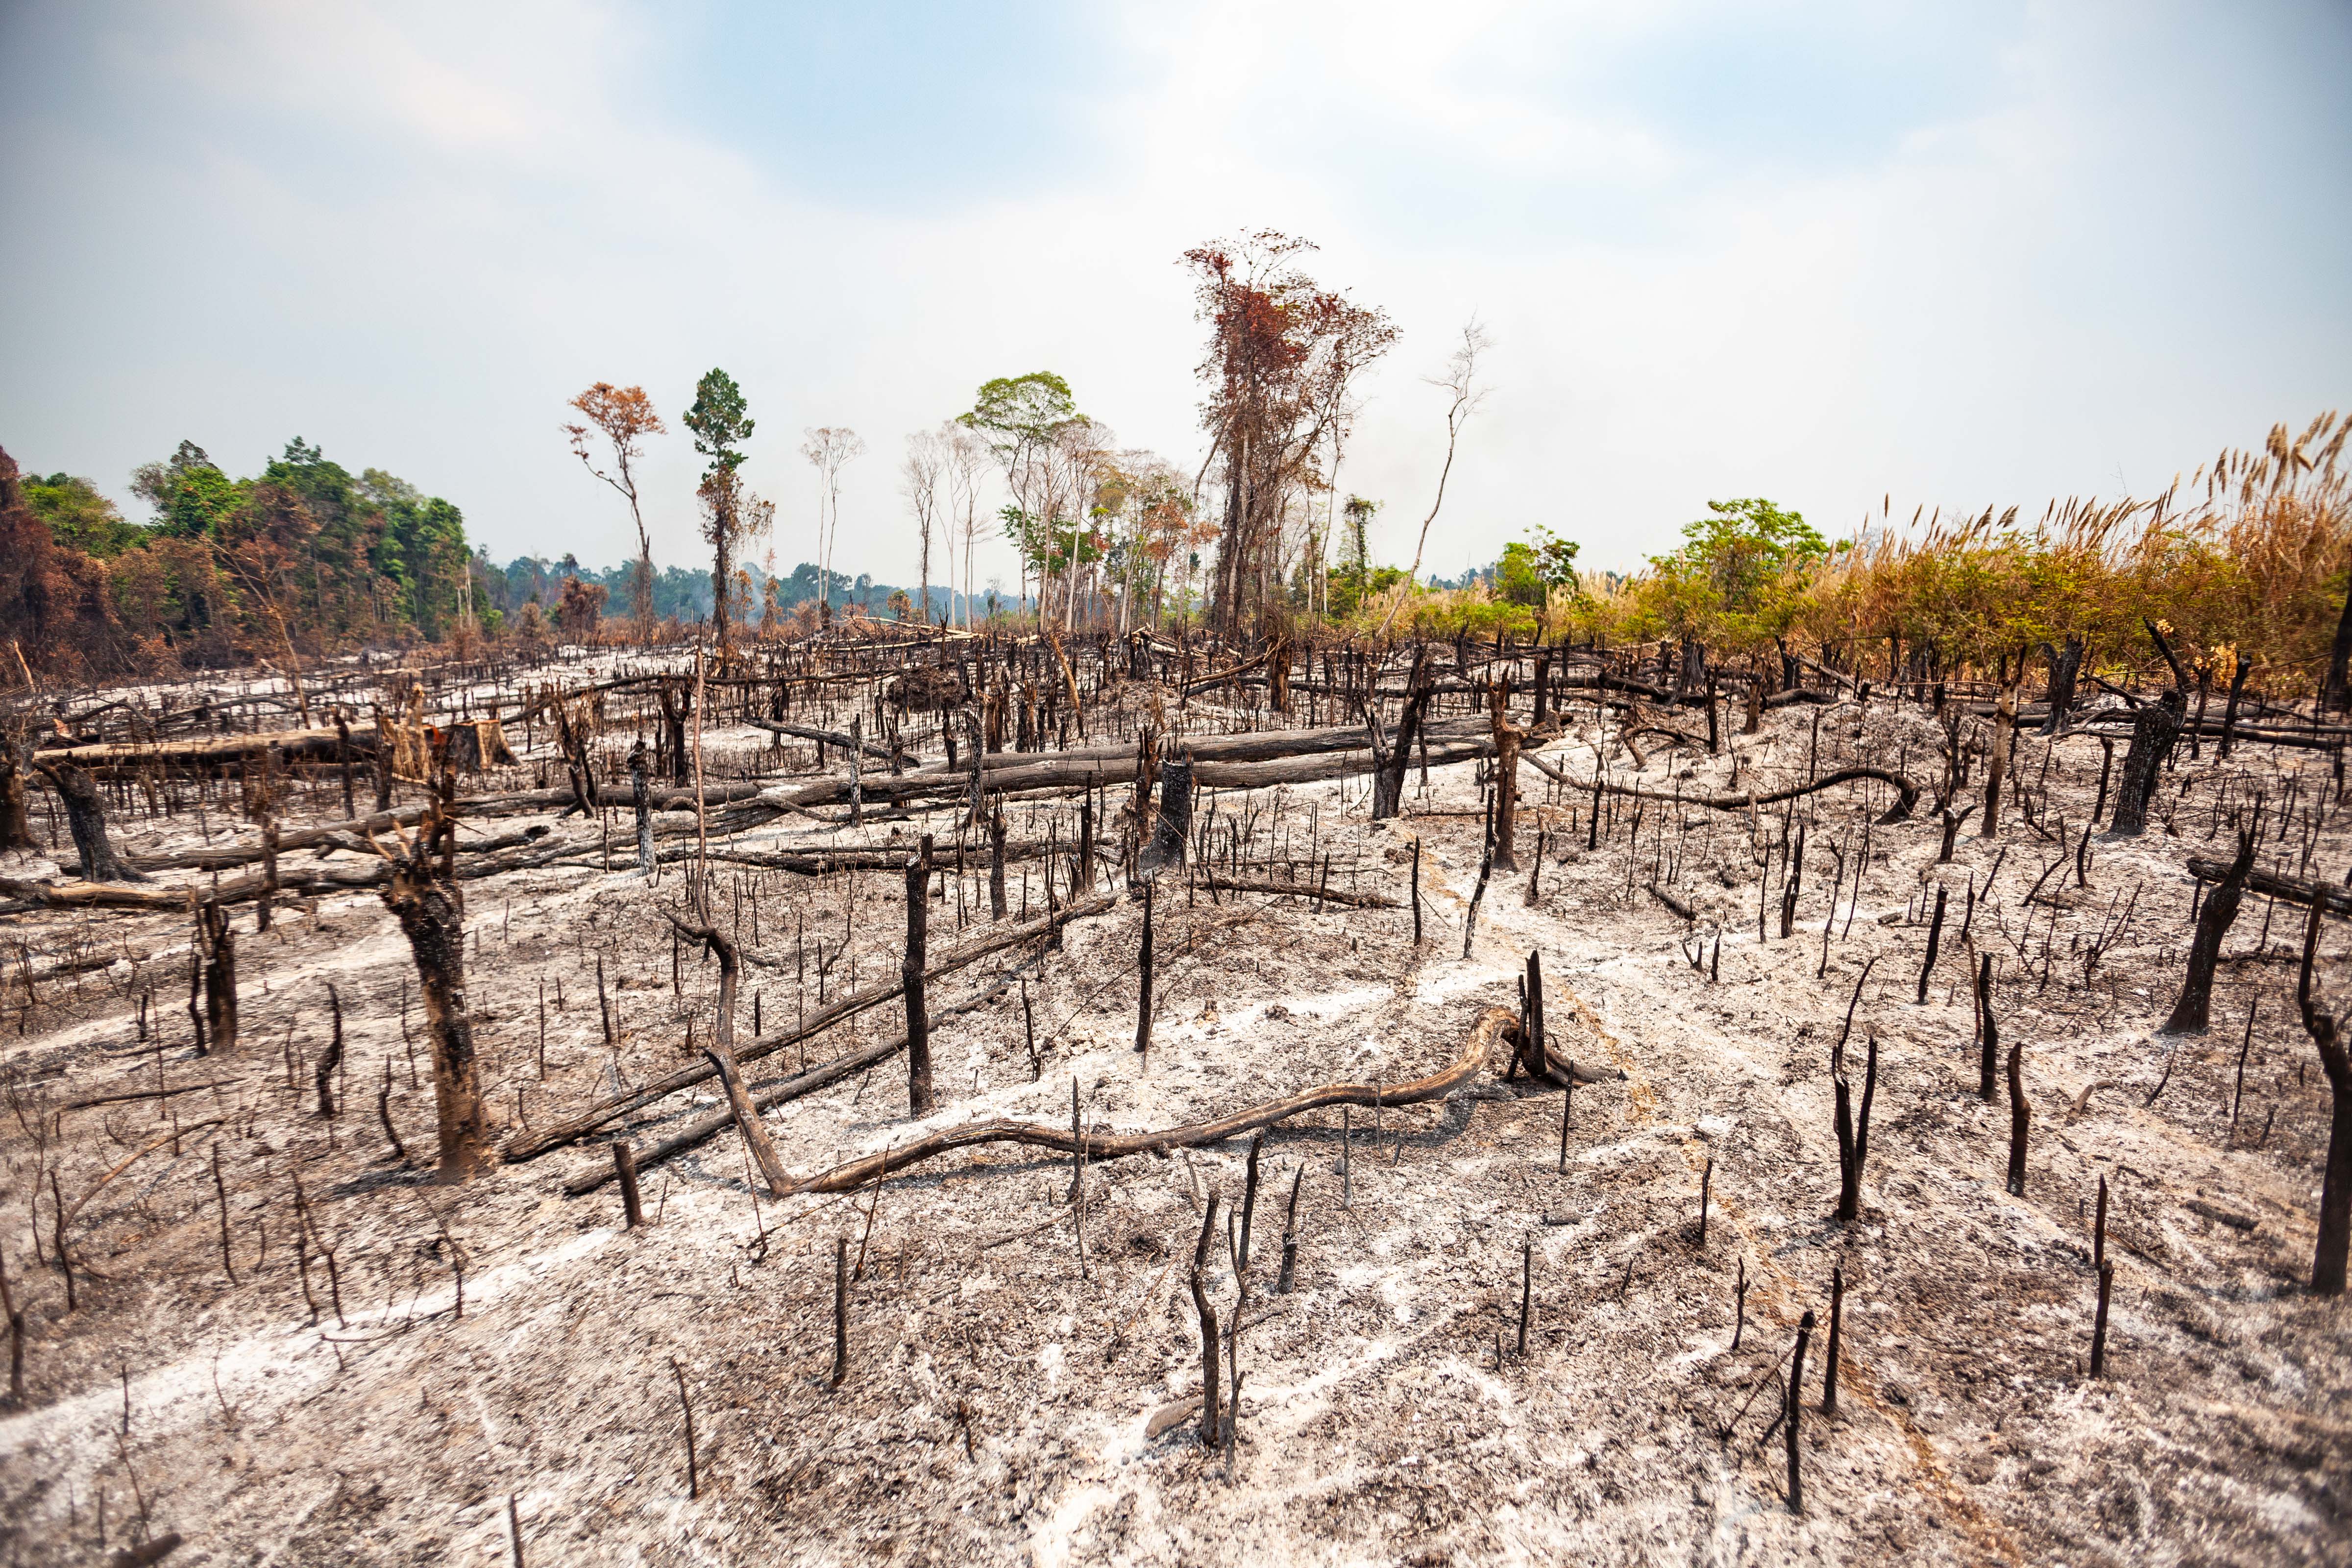 Cambodia, Stueng Traeng Prov, Burnt Forest, 2011, IMG 0470